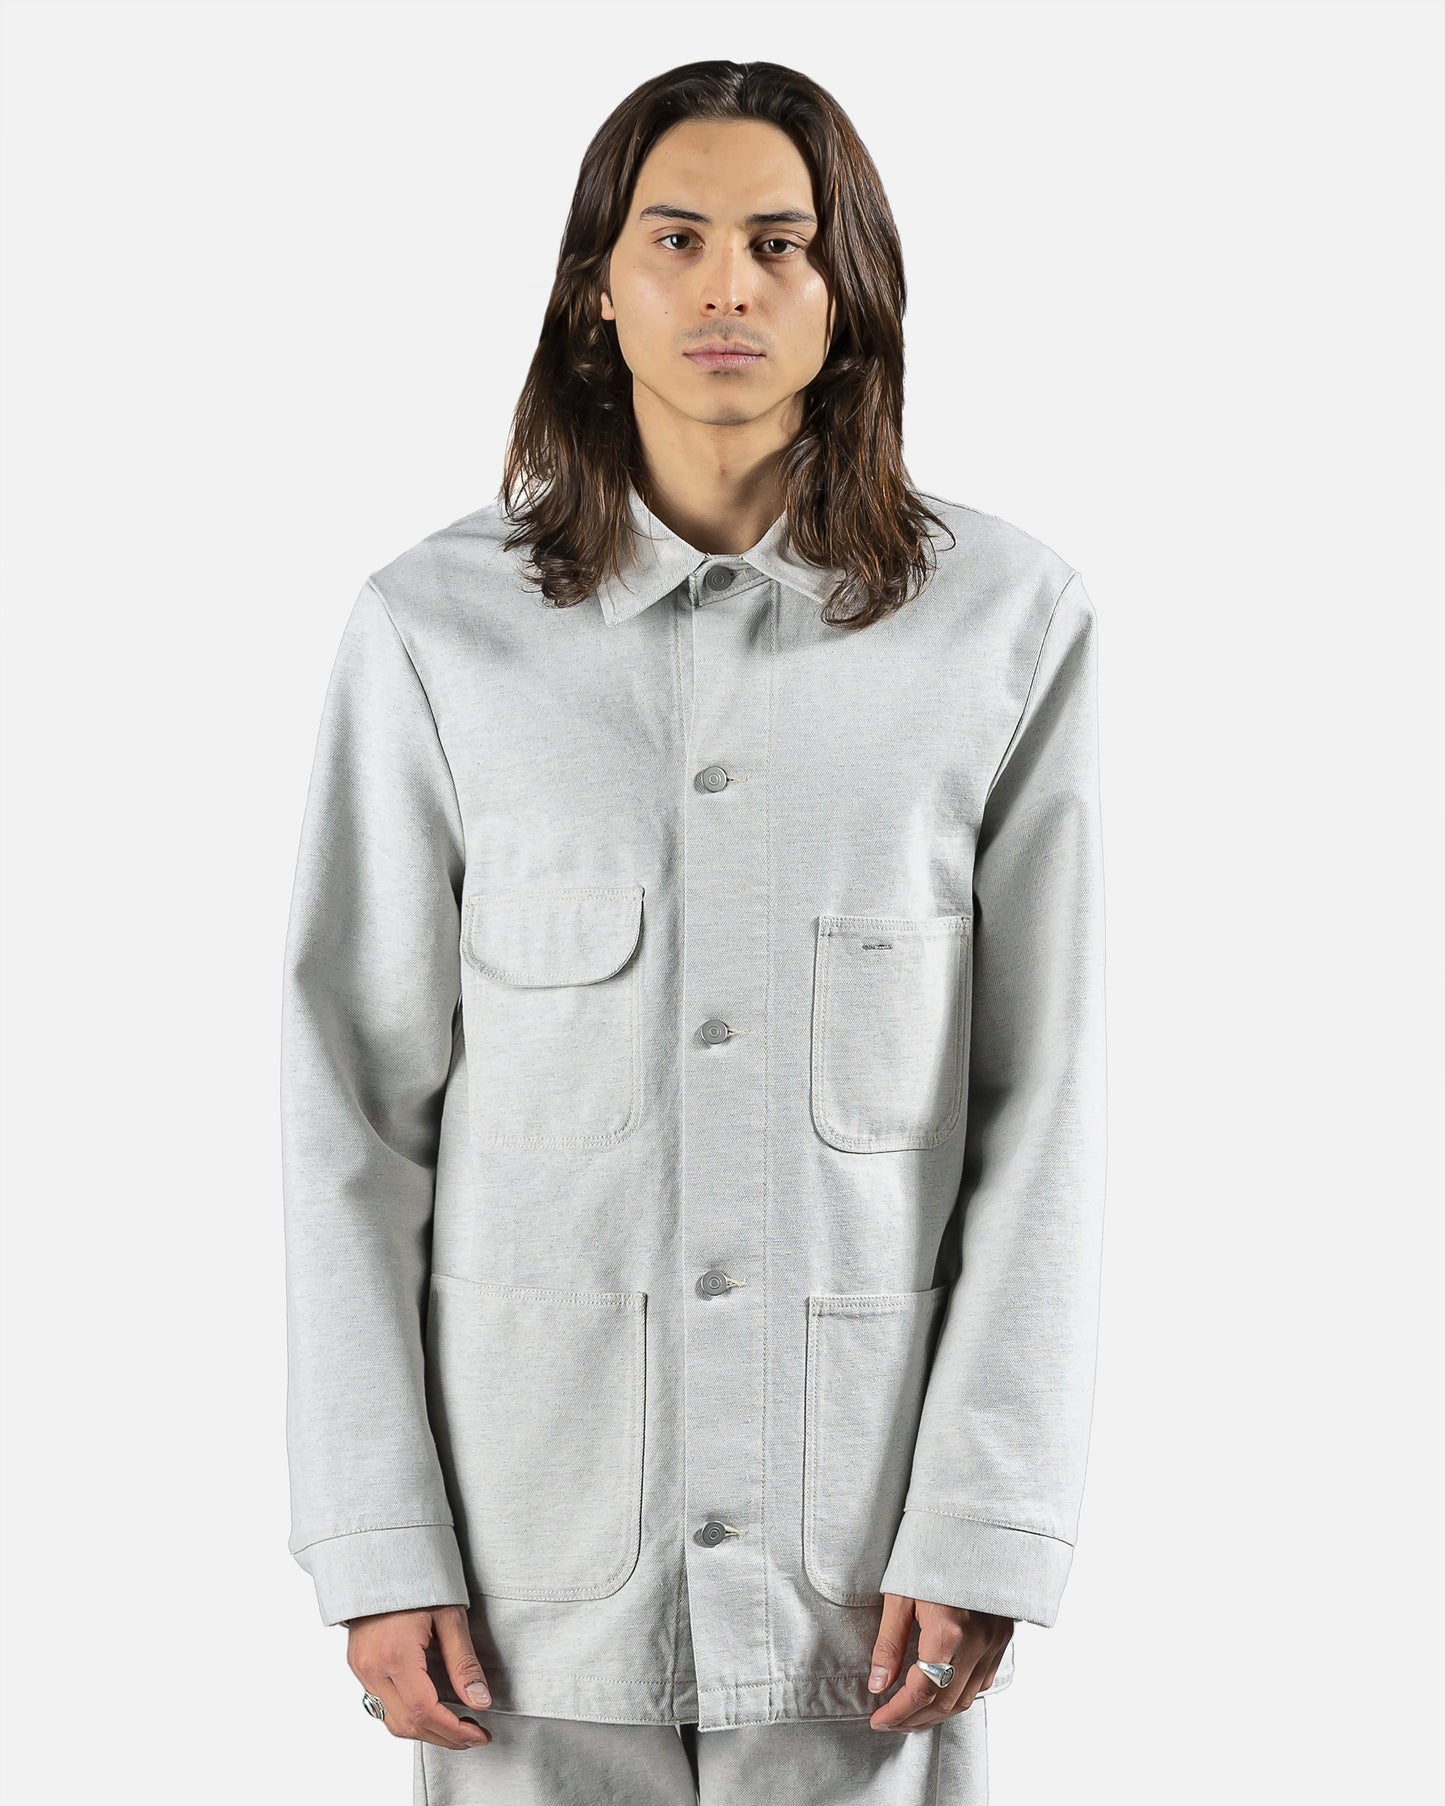 Maison Margiela Men's Jackets Denim Sport Jacket in Grey